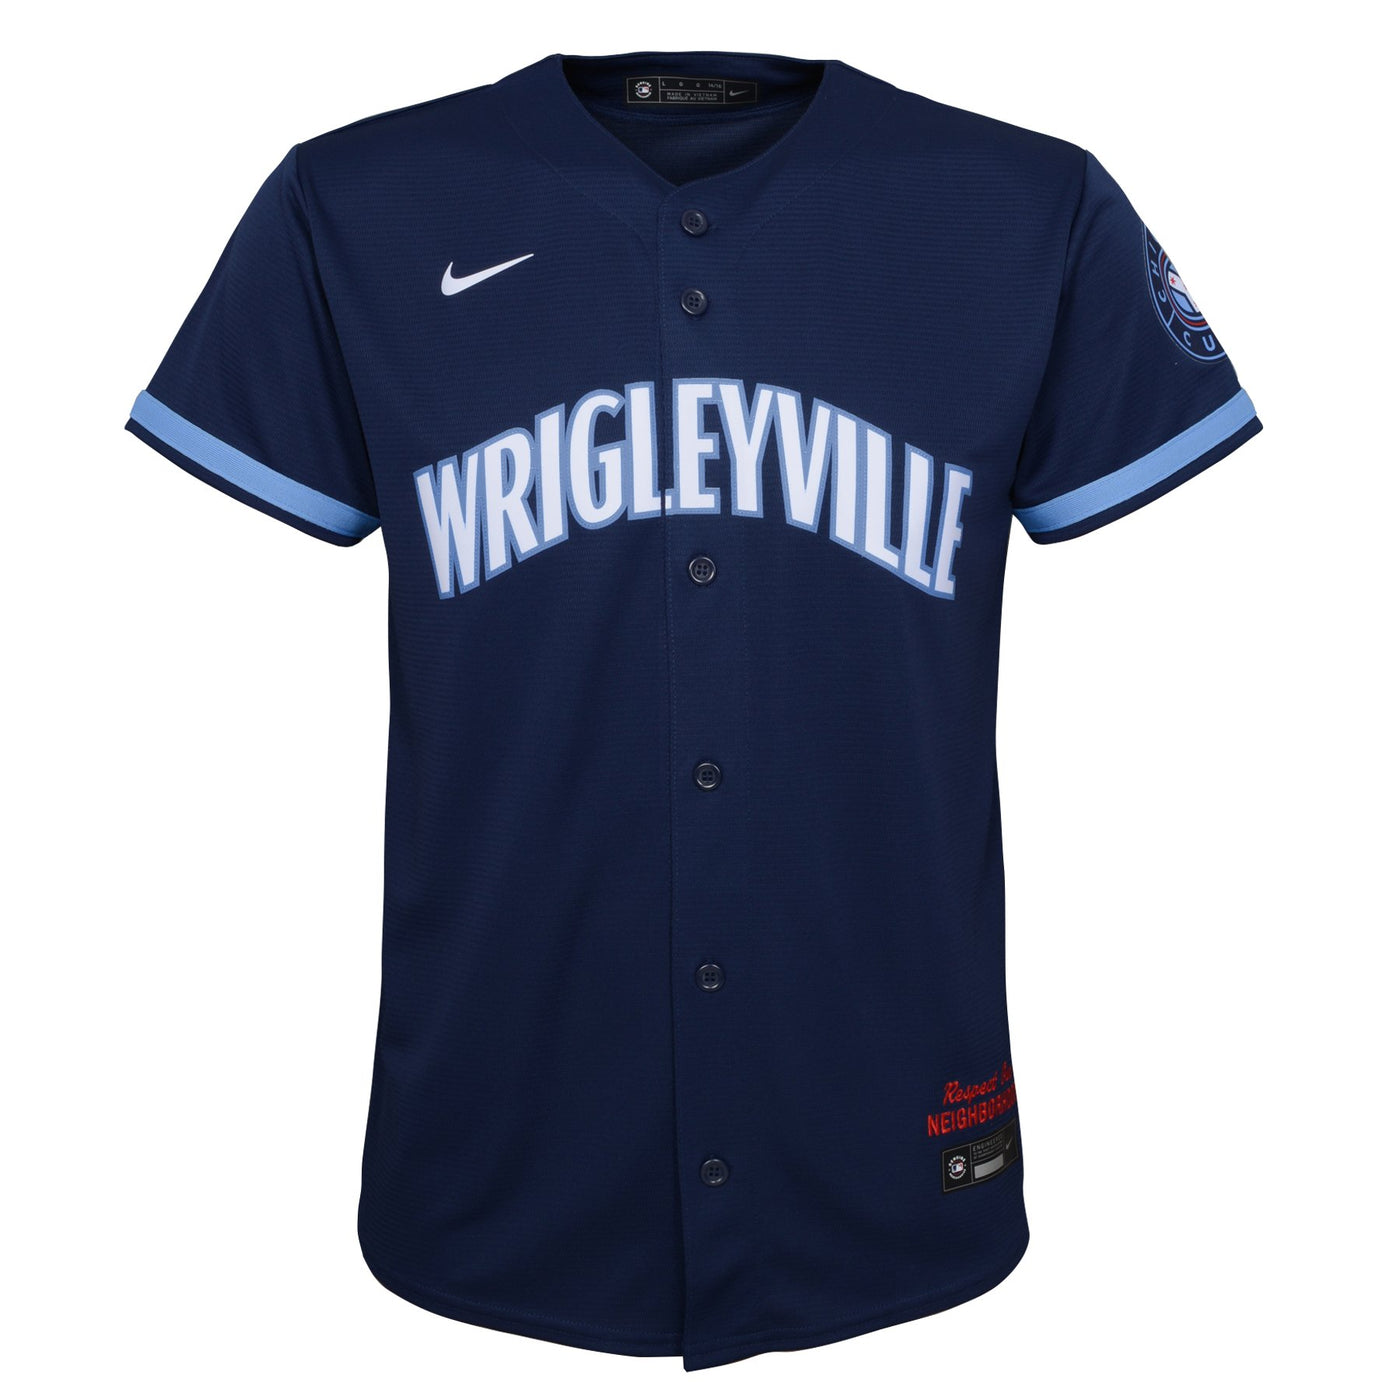 Cubs to bring back Wrigleyville jerseys, celebrate Chicago's neighborhoods